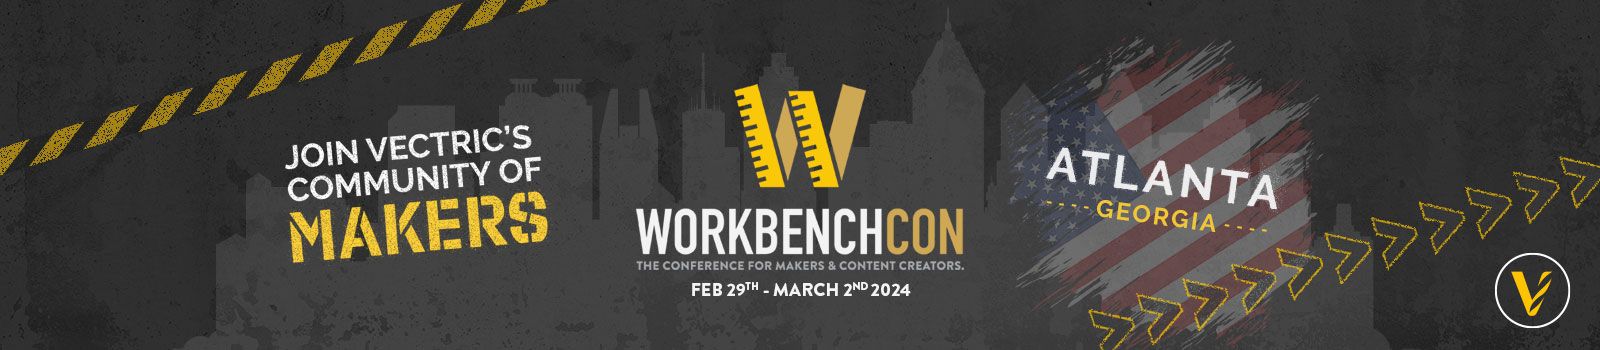 WorkbenchCon 2024